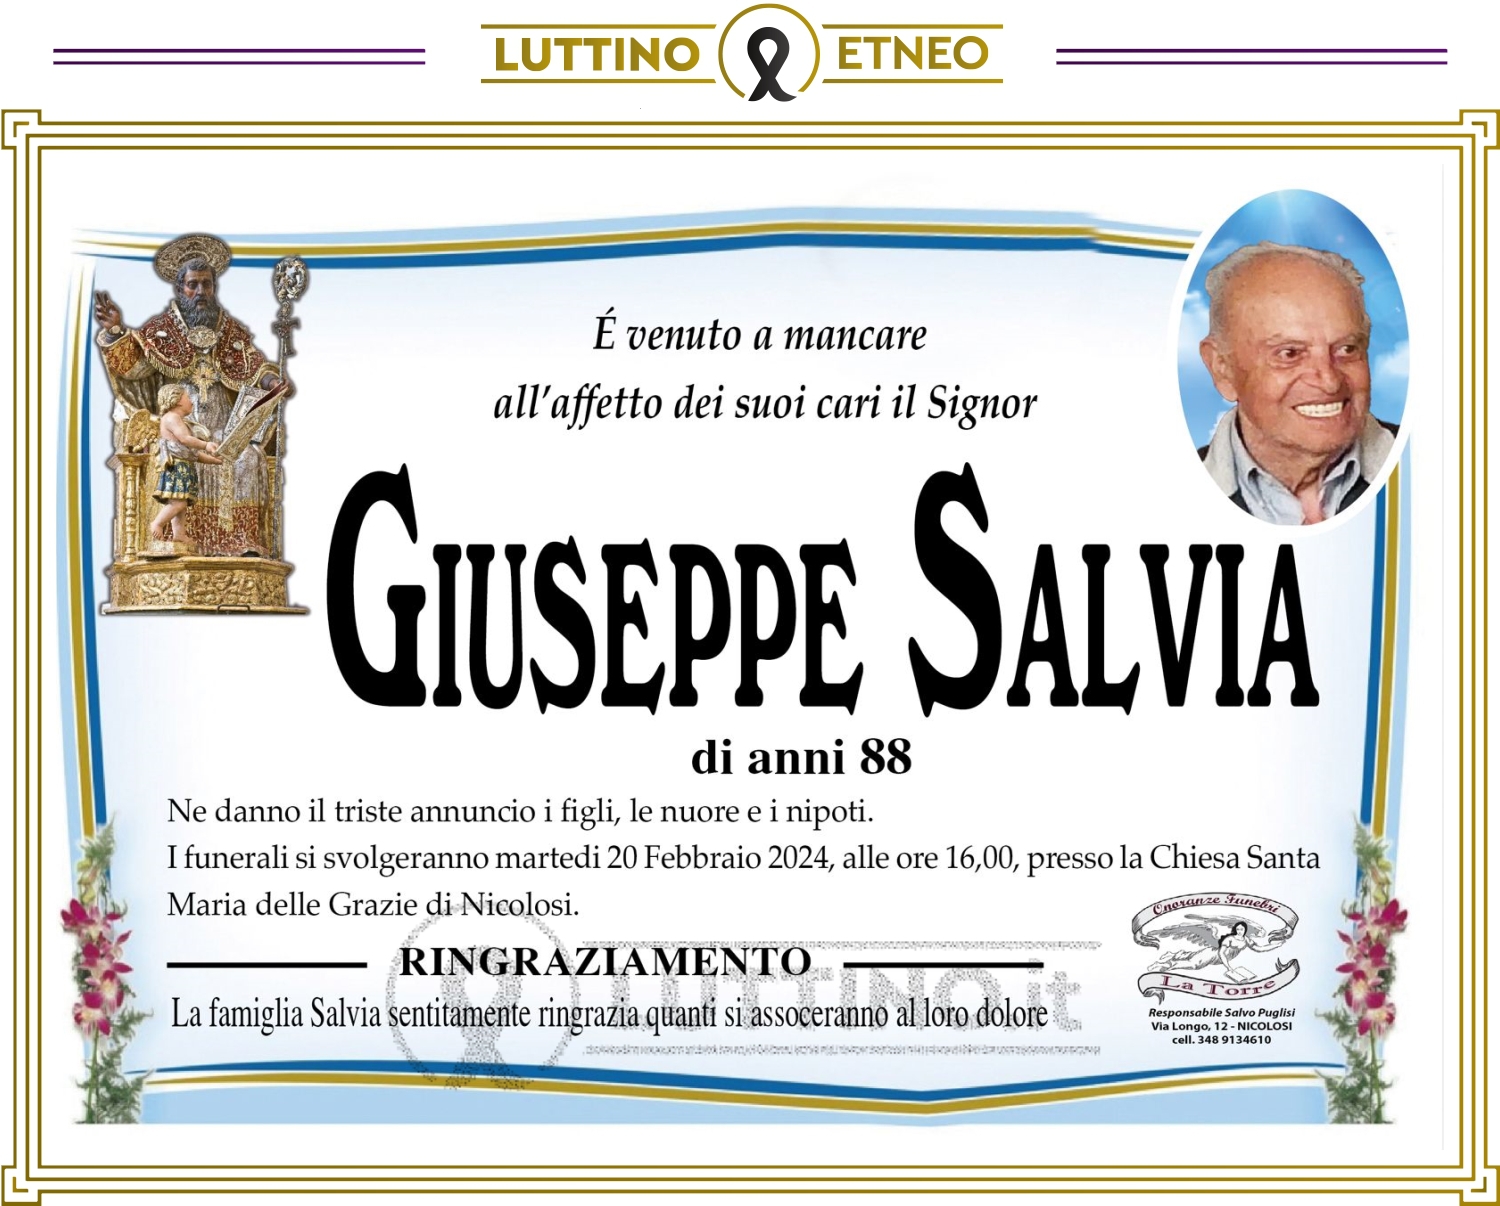 Giuseppe Salvia